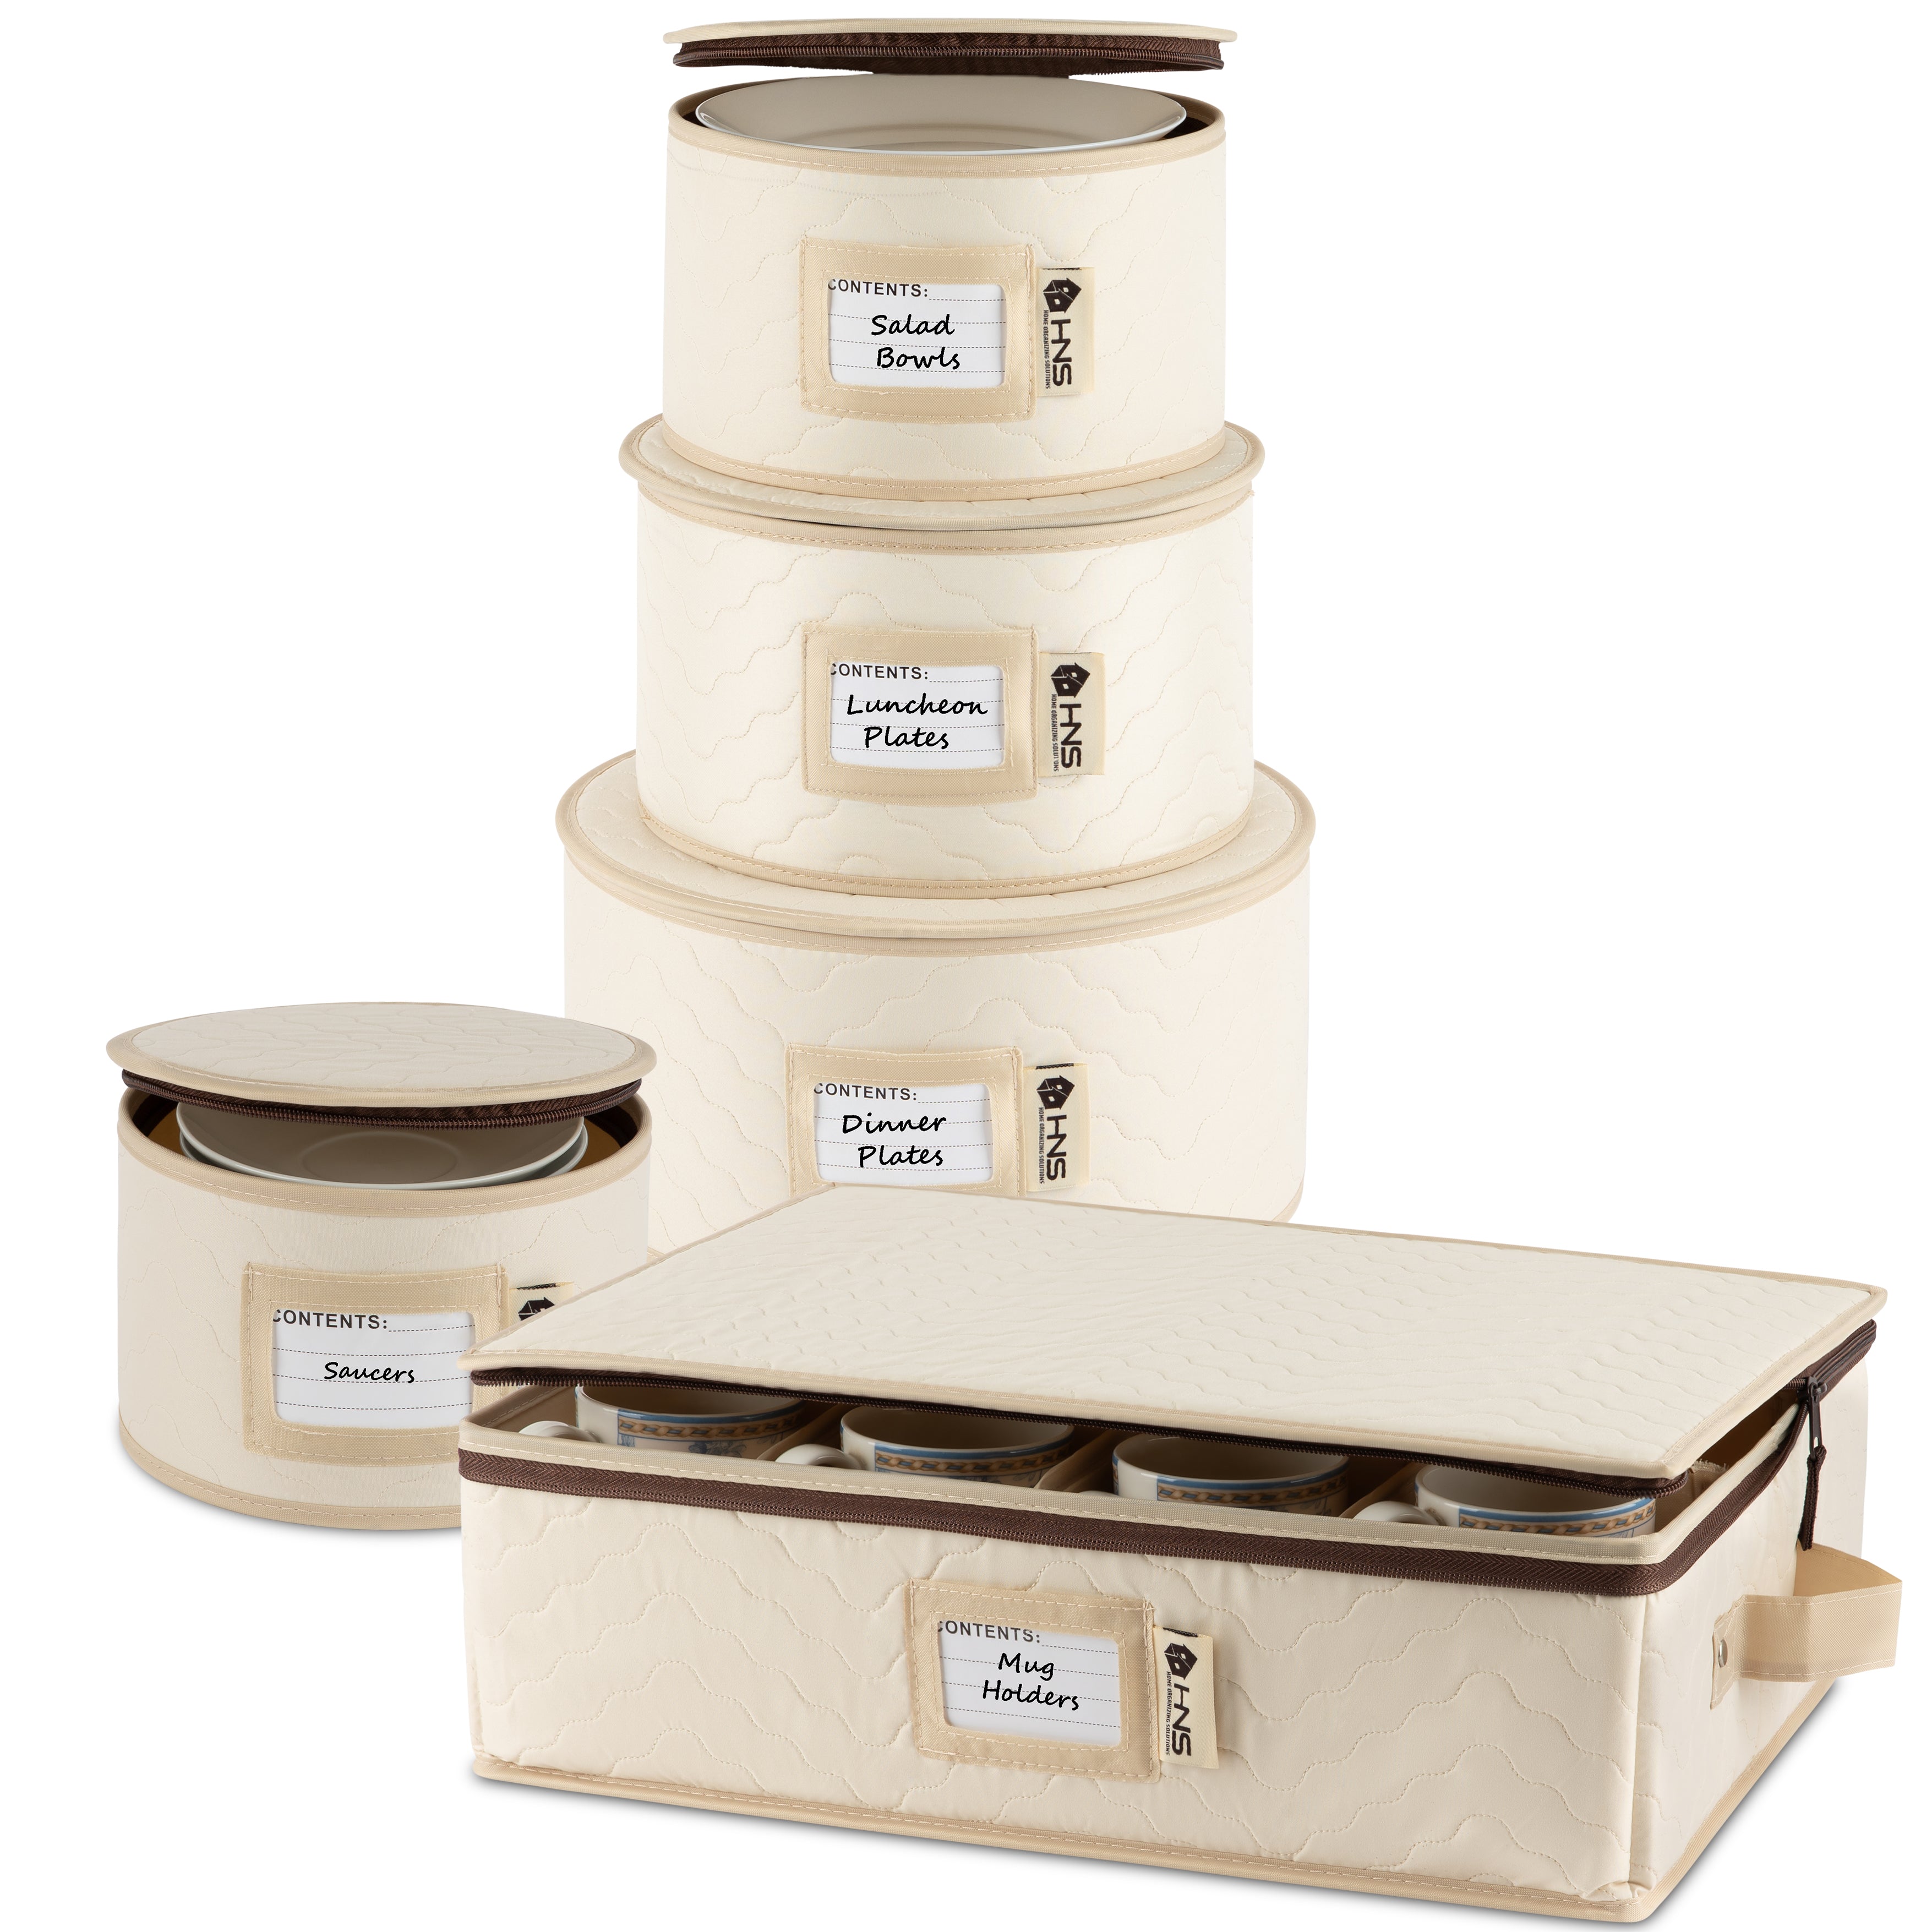  Coffee Mug Storage Box with Dividers, Durable China